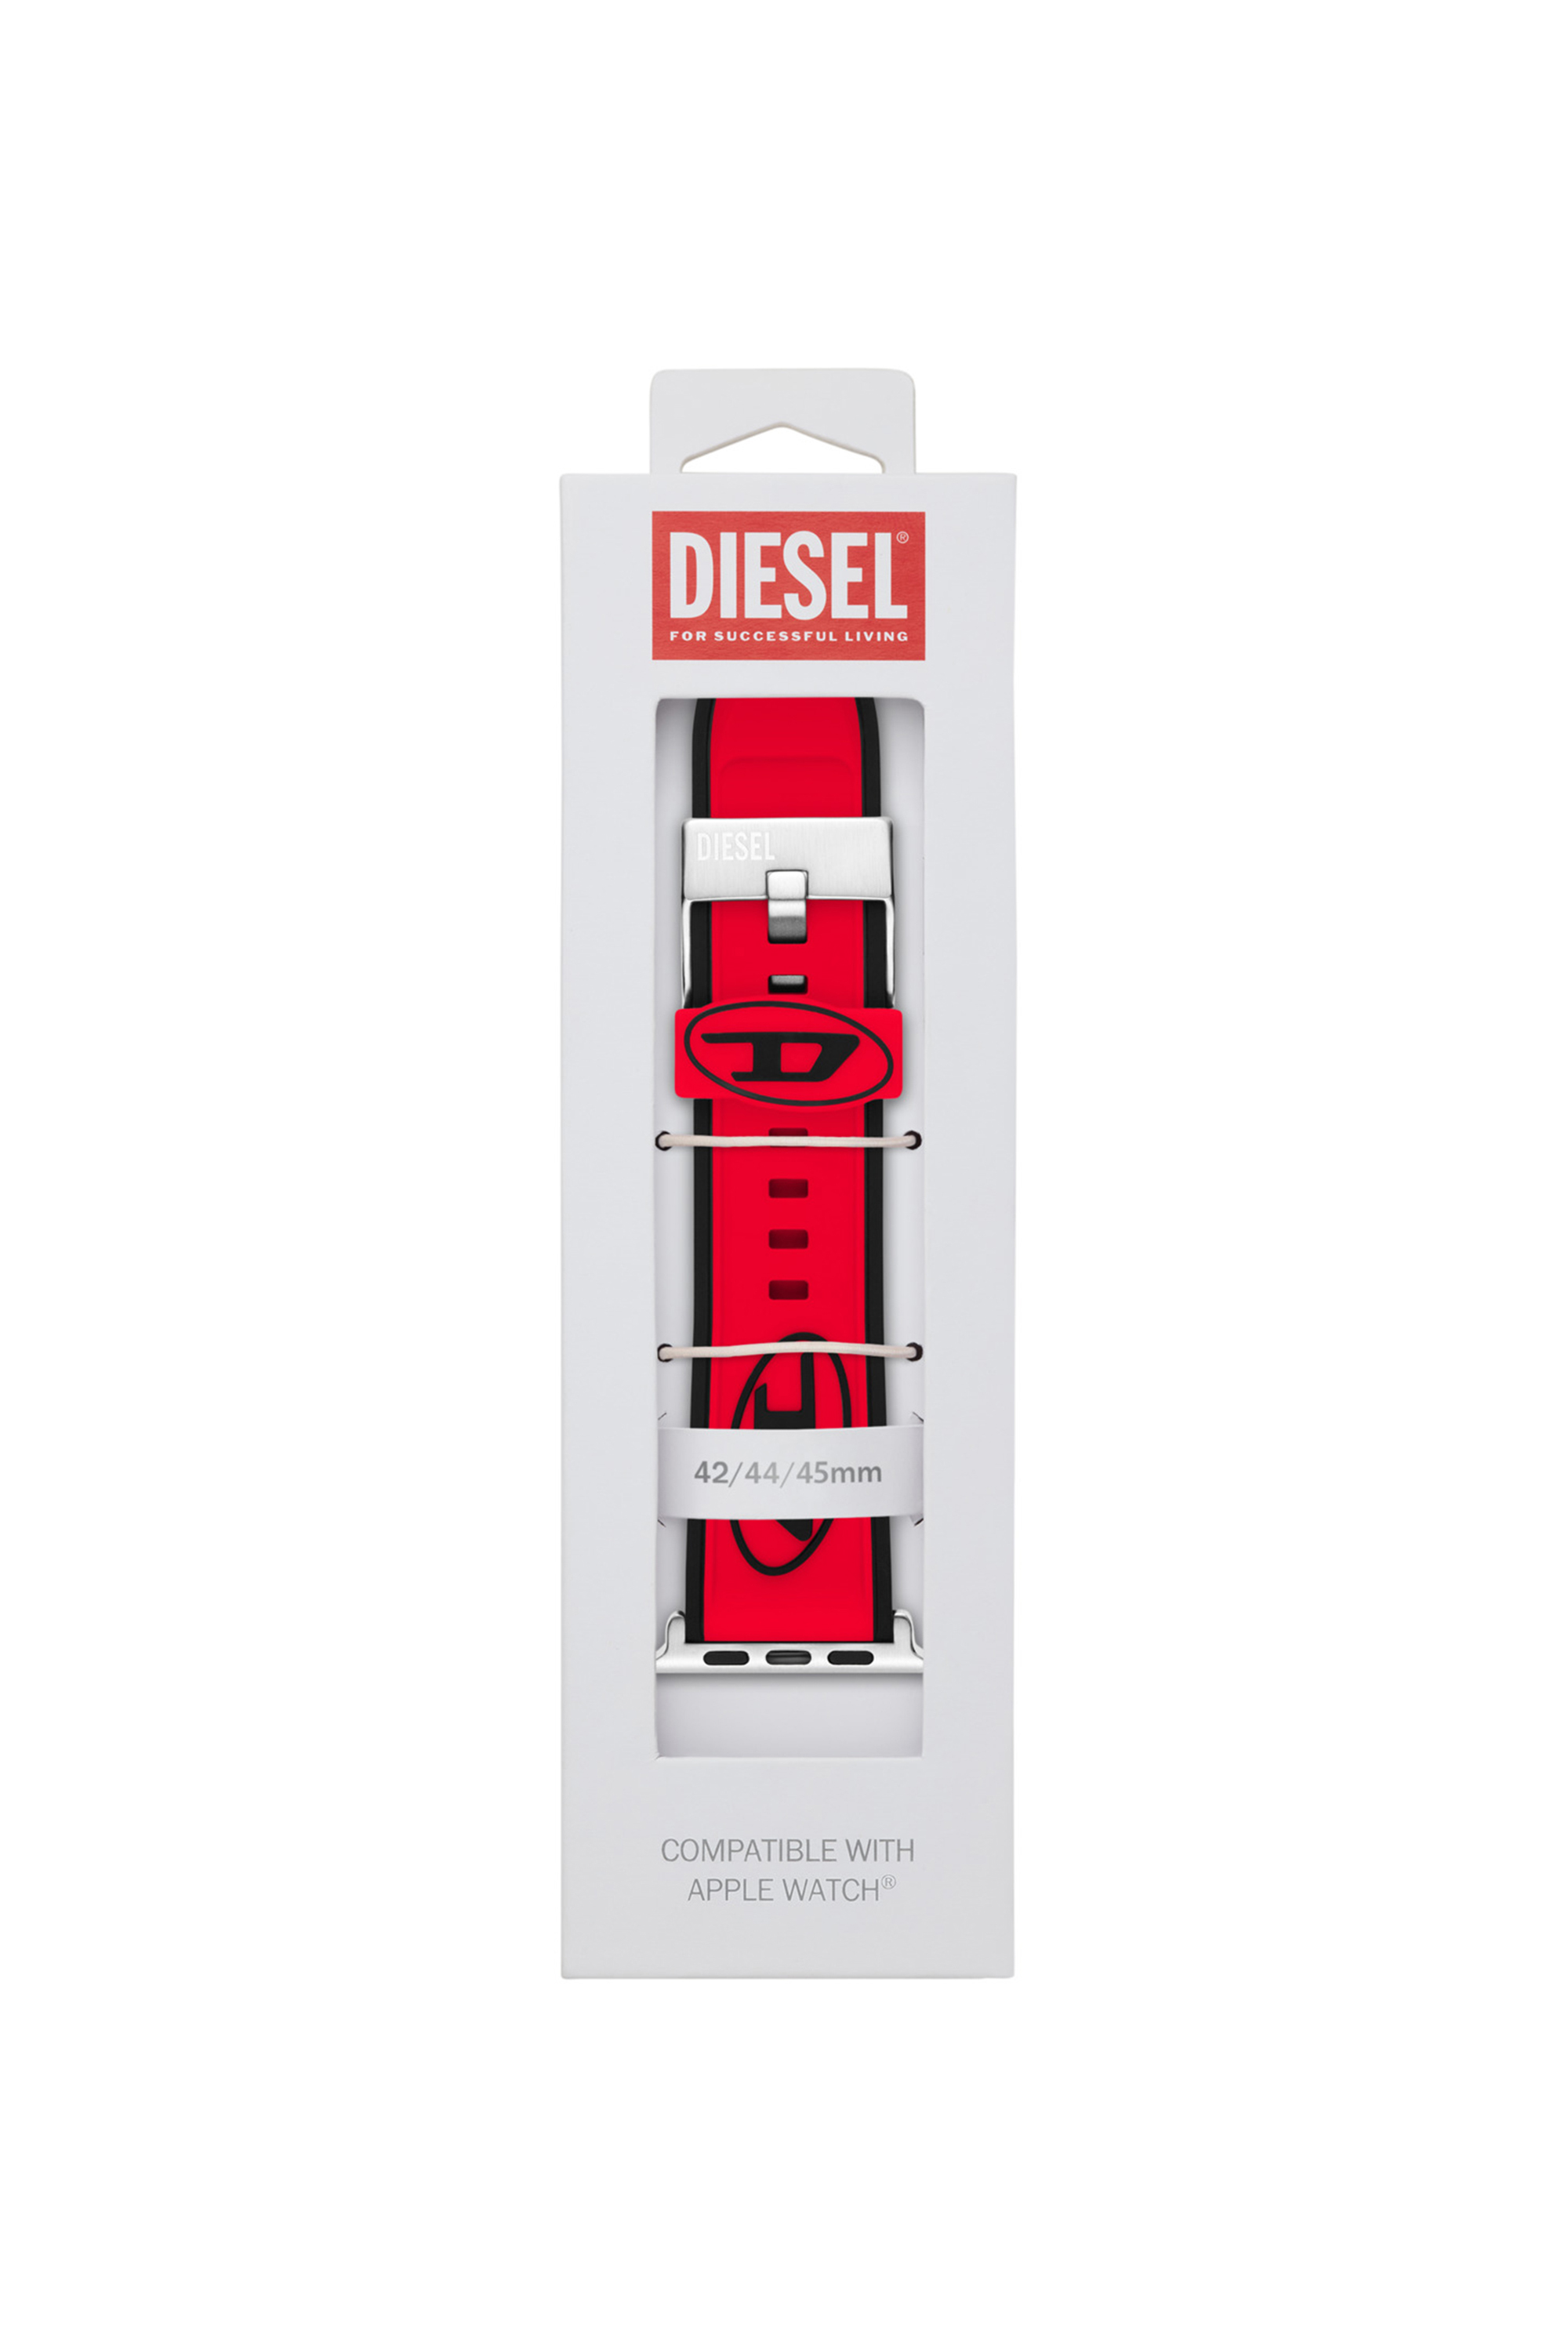 Diesel - DSS010, Rosso - Image 2